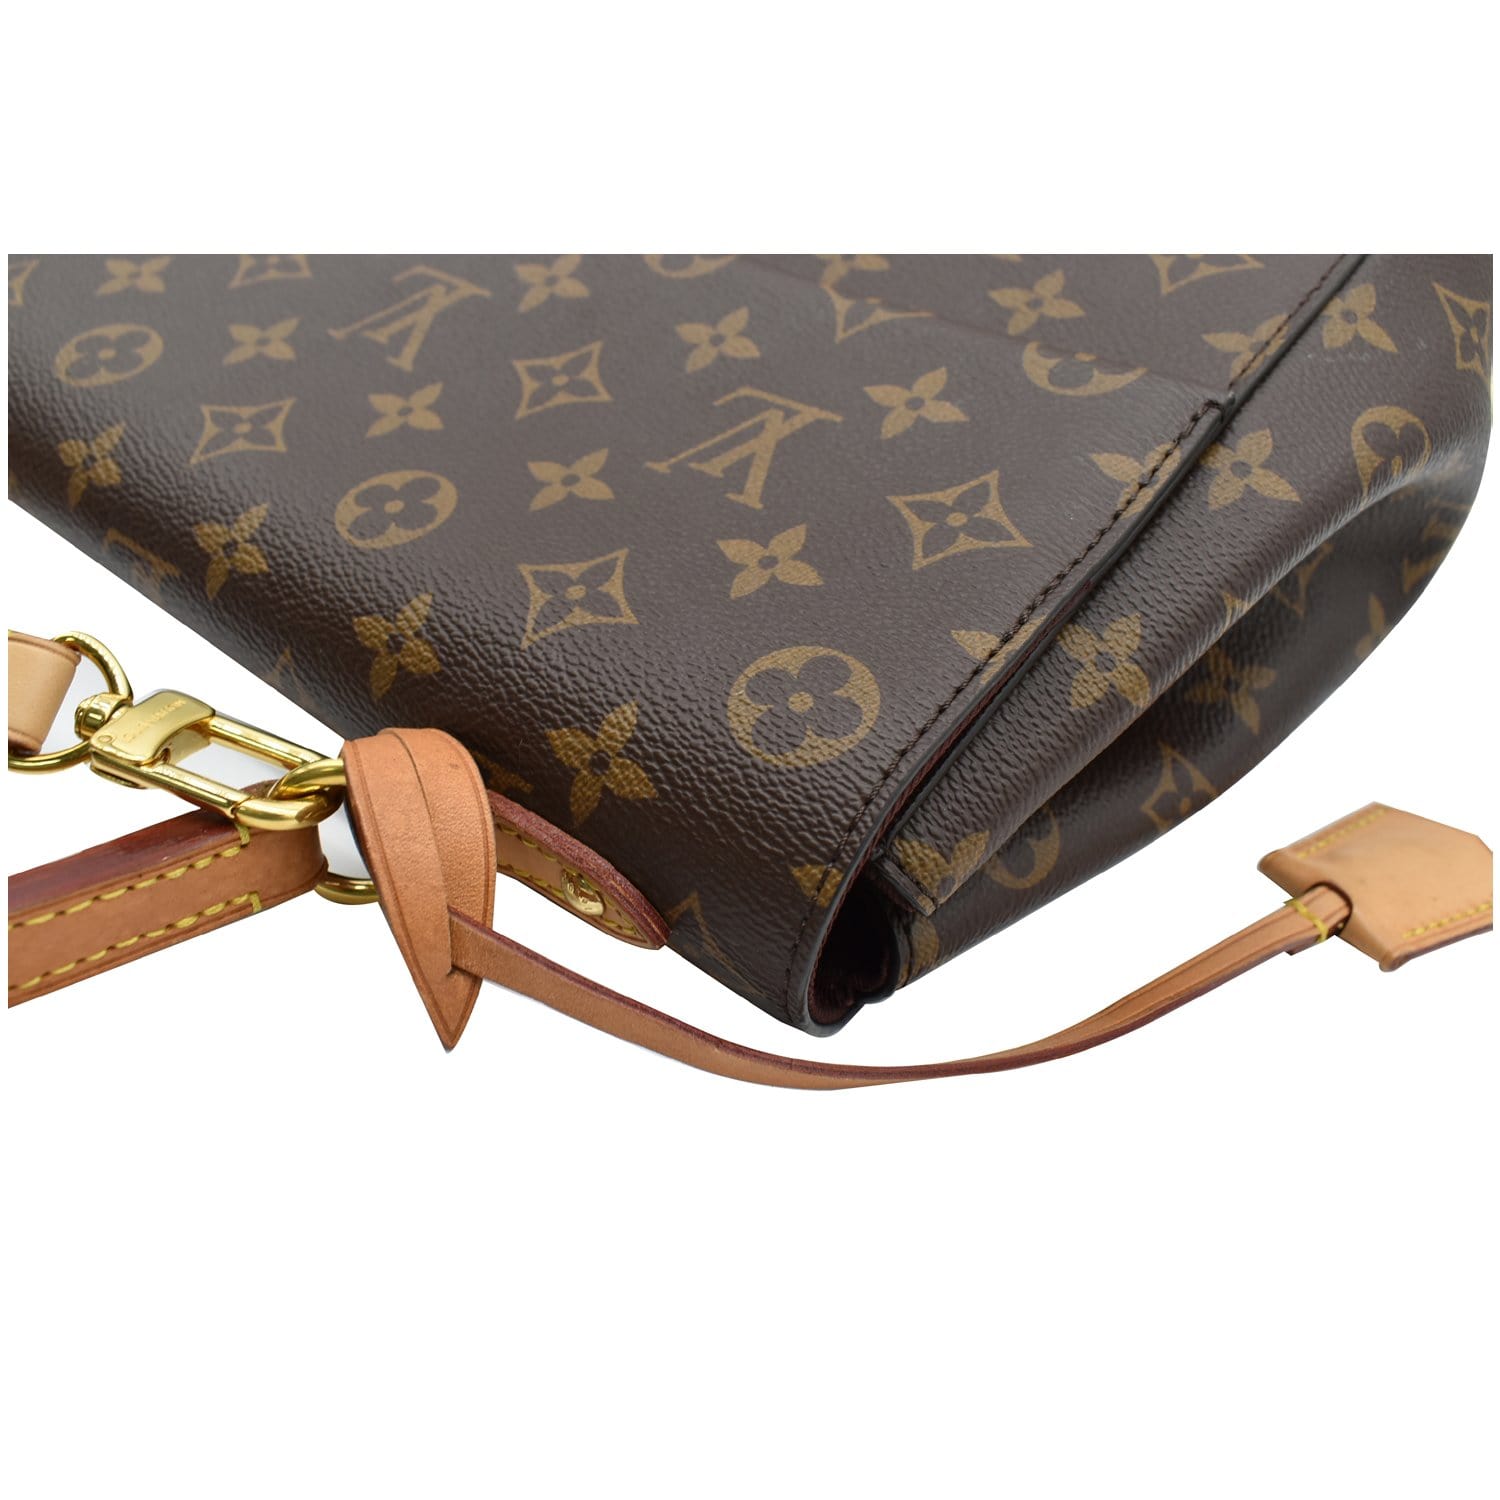 Cluny handbag Louis Vuitton Brown in Synthetic - 24455794